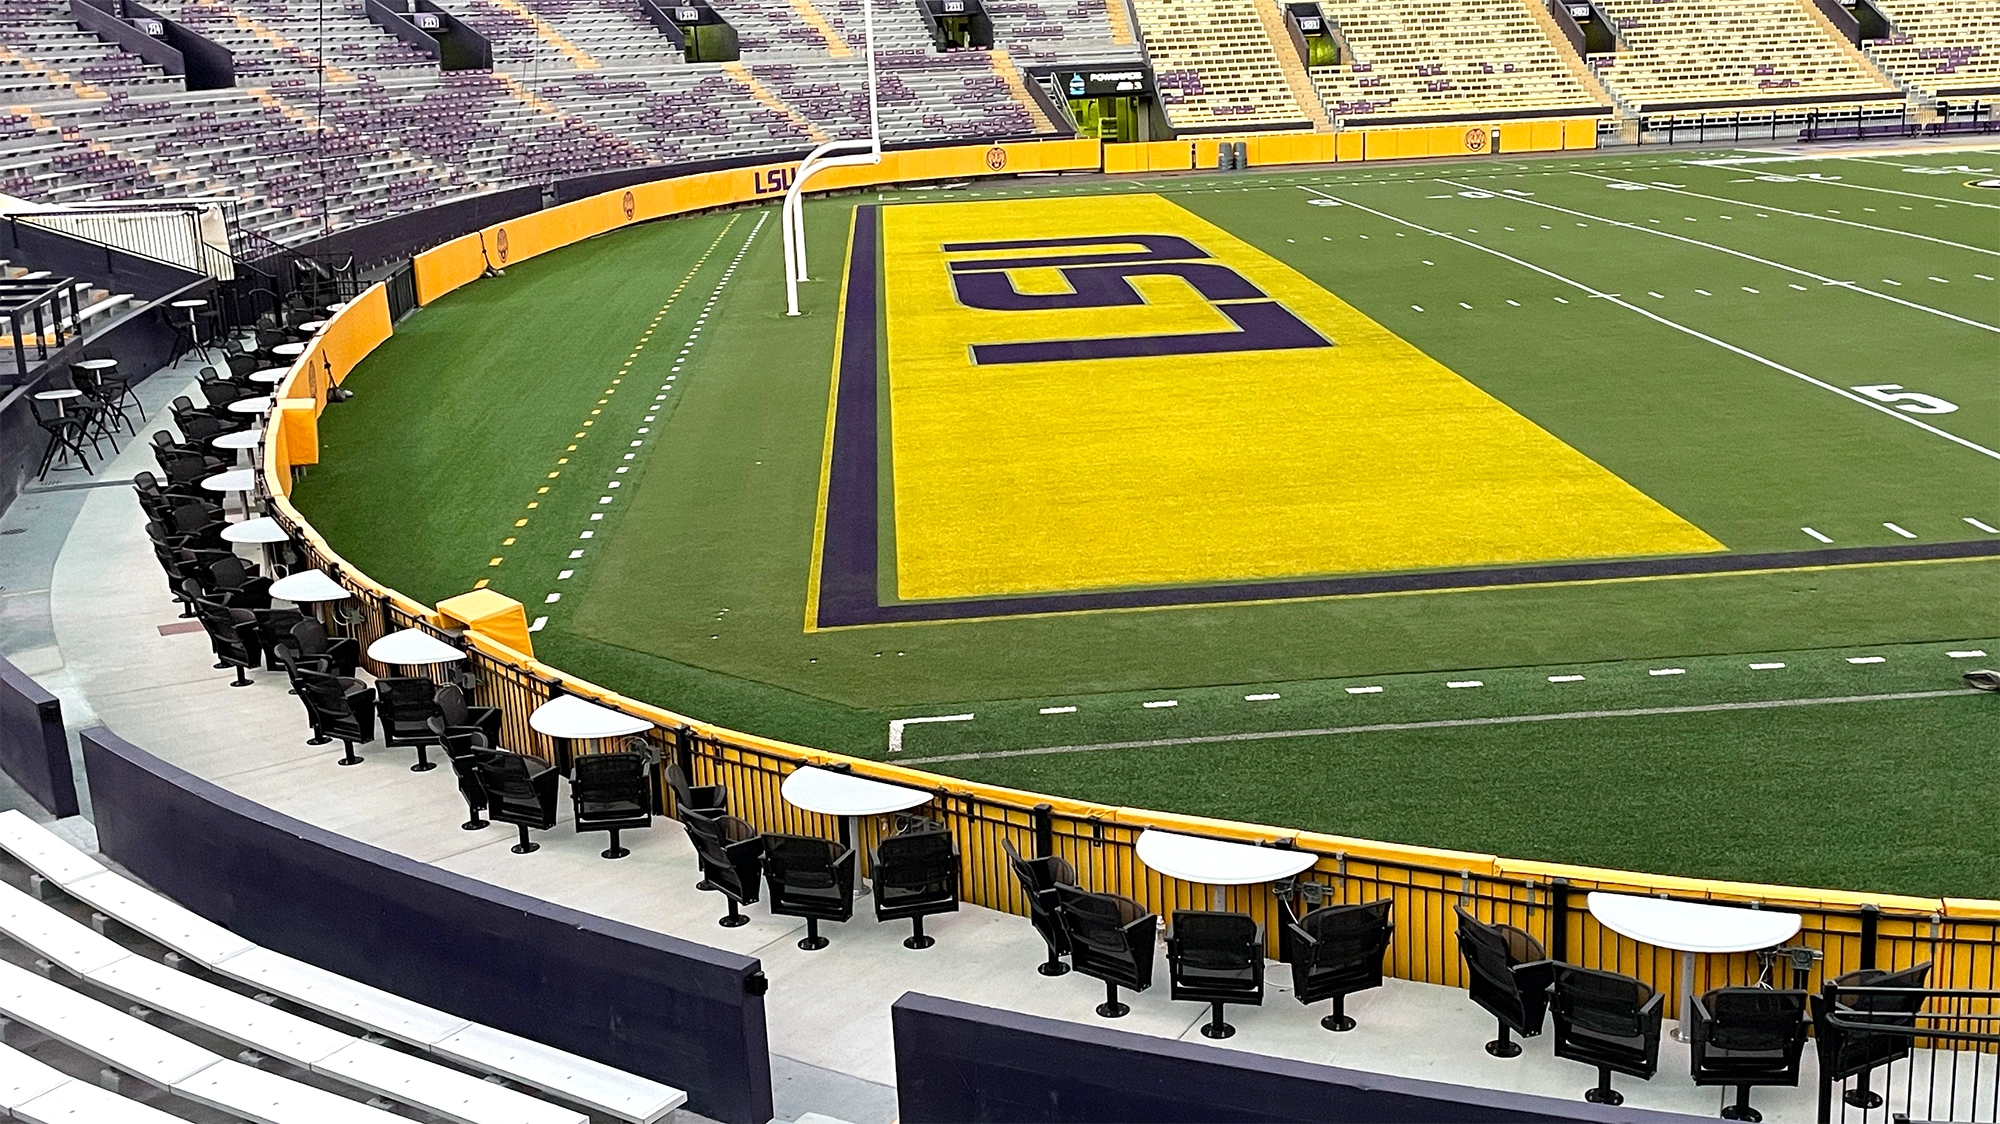 panoramic view of LSU football stadium featuring 4topps loge installs